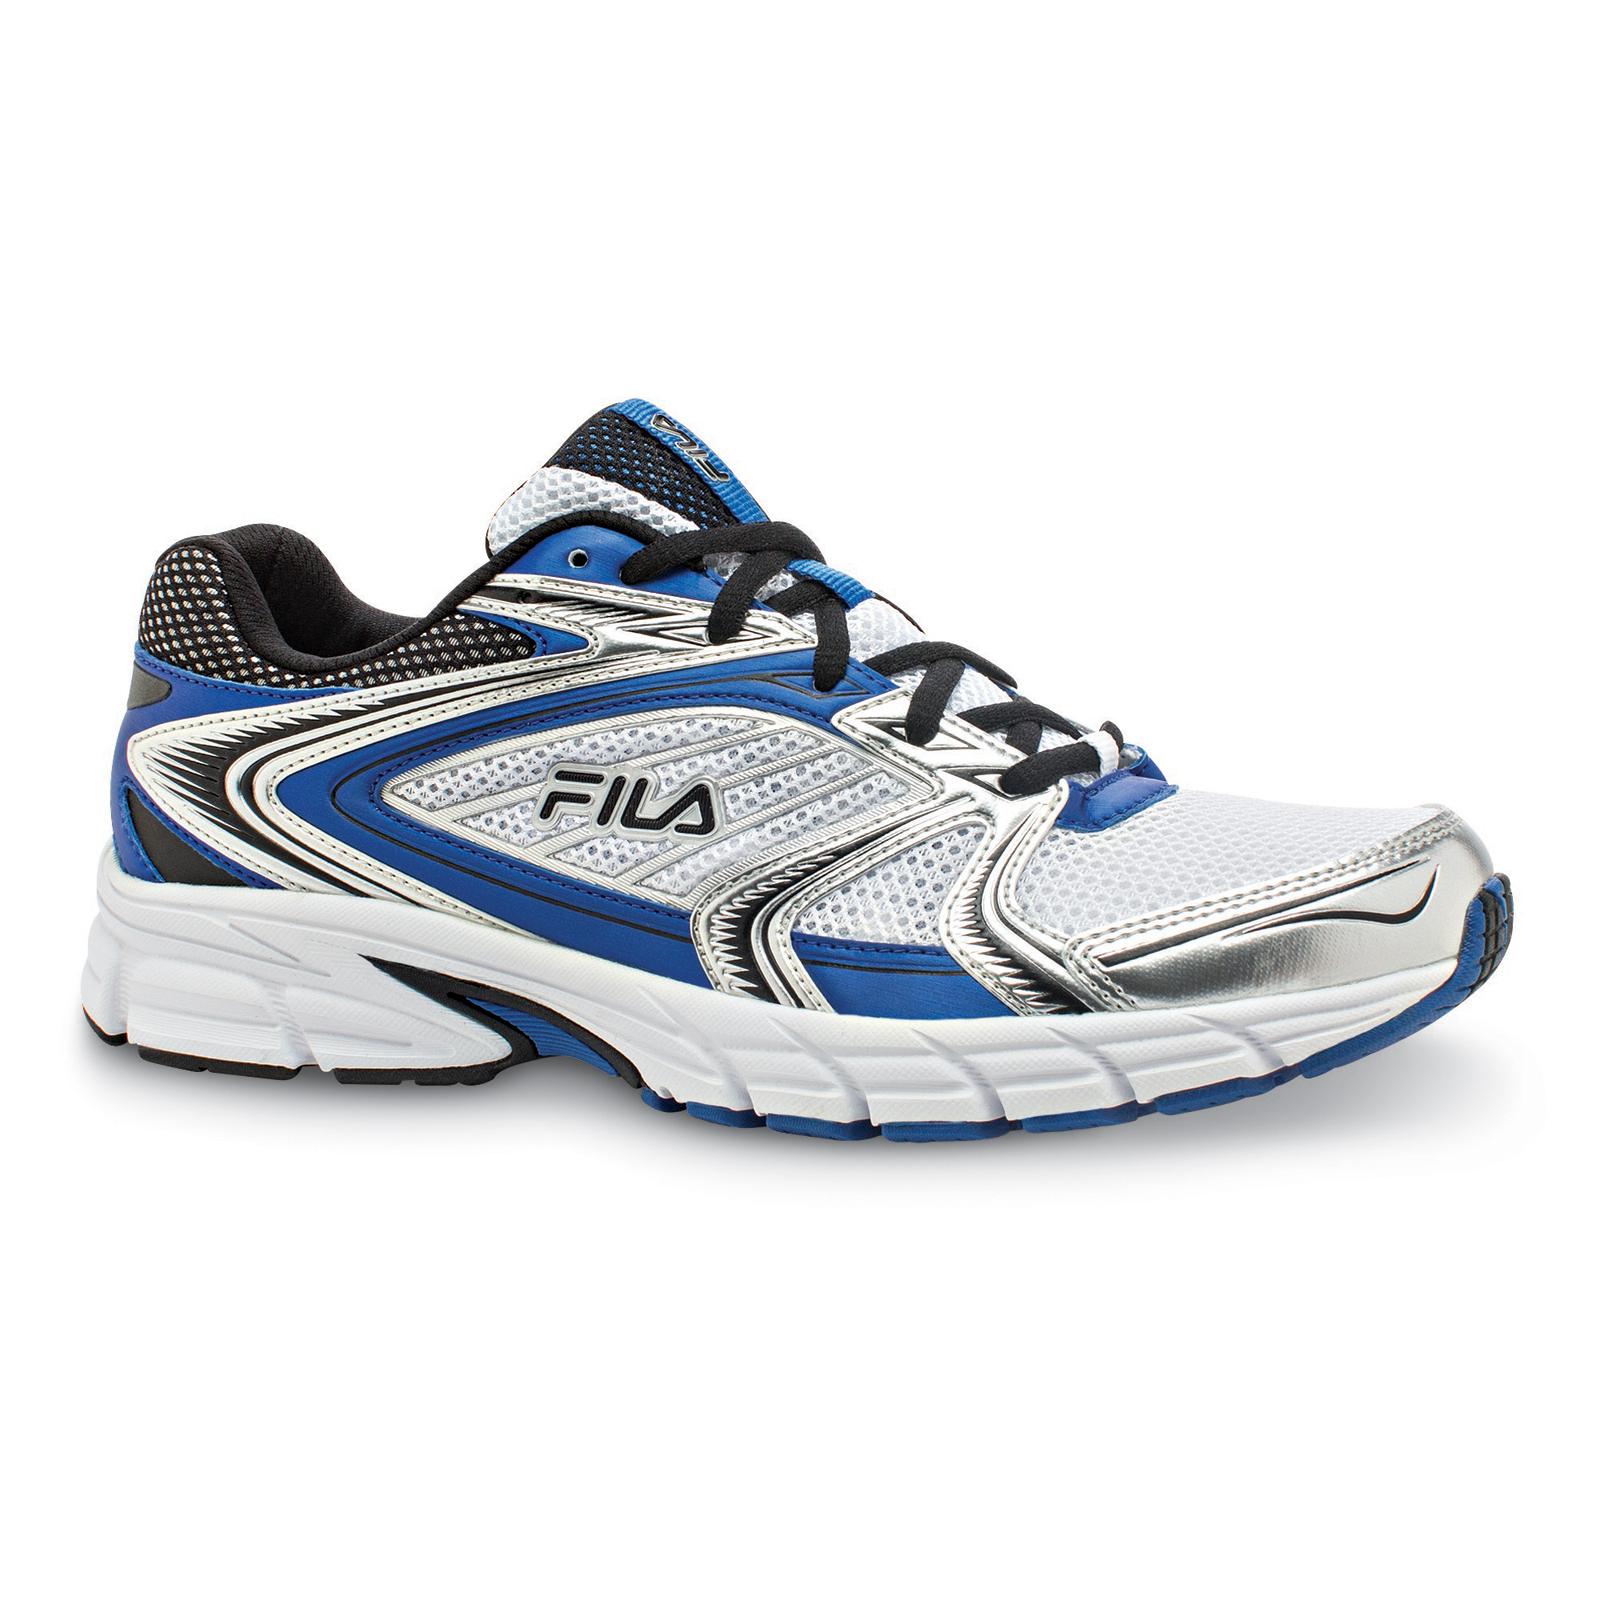 Fila Men's Reckoning 7 Running Shoe